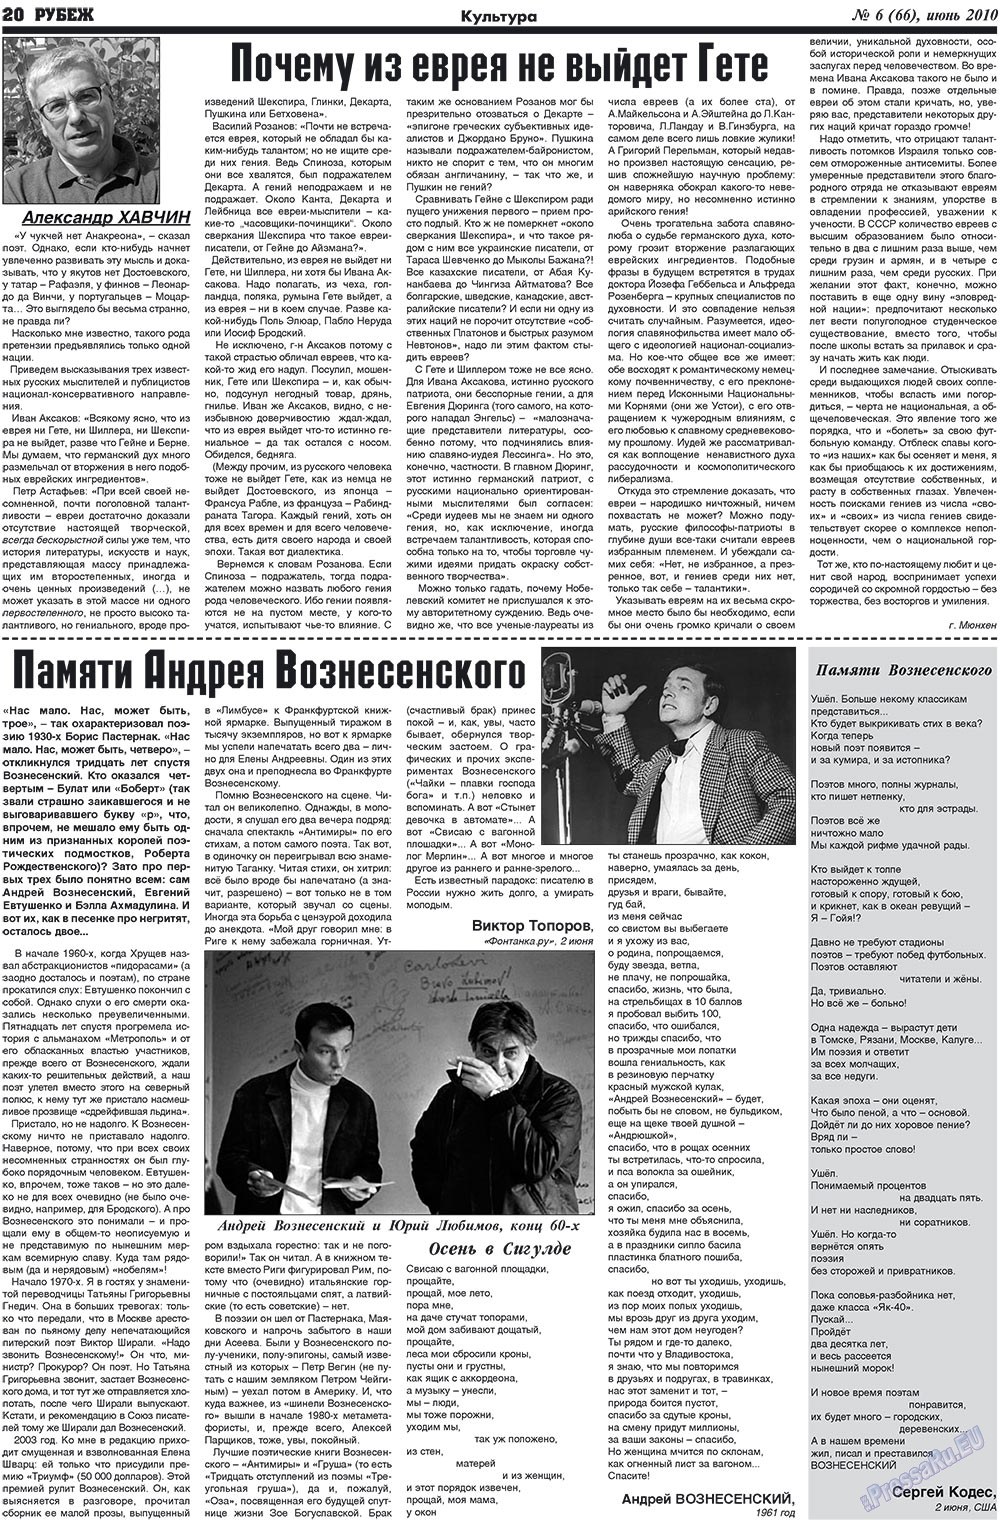 Рубеж, газета. 2010 №6 стр.20